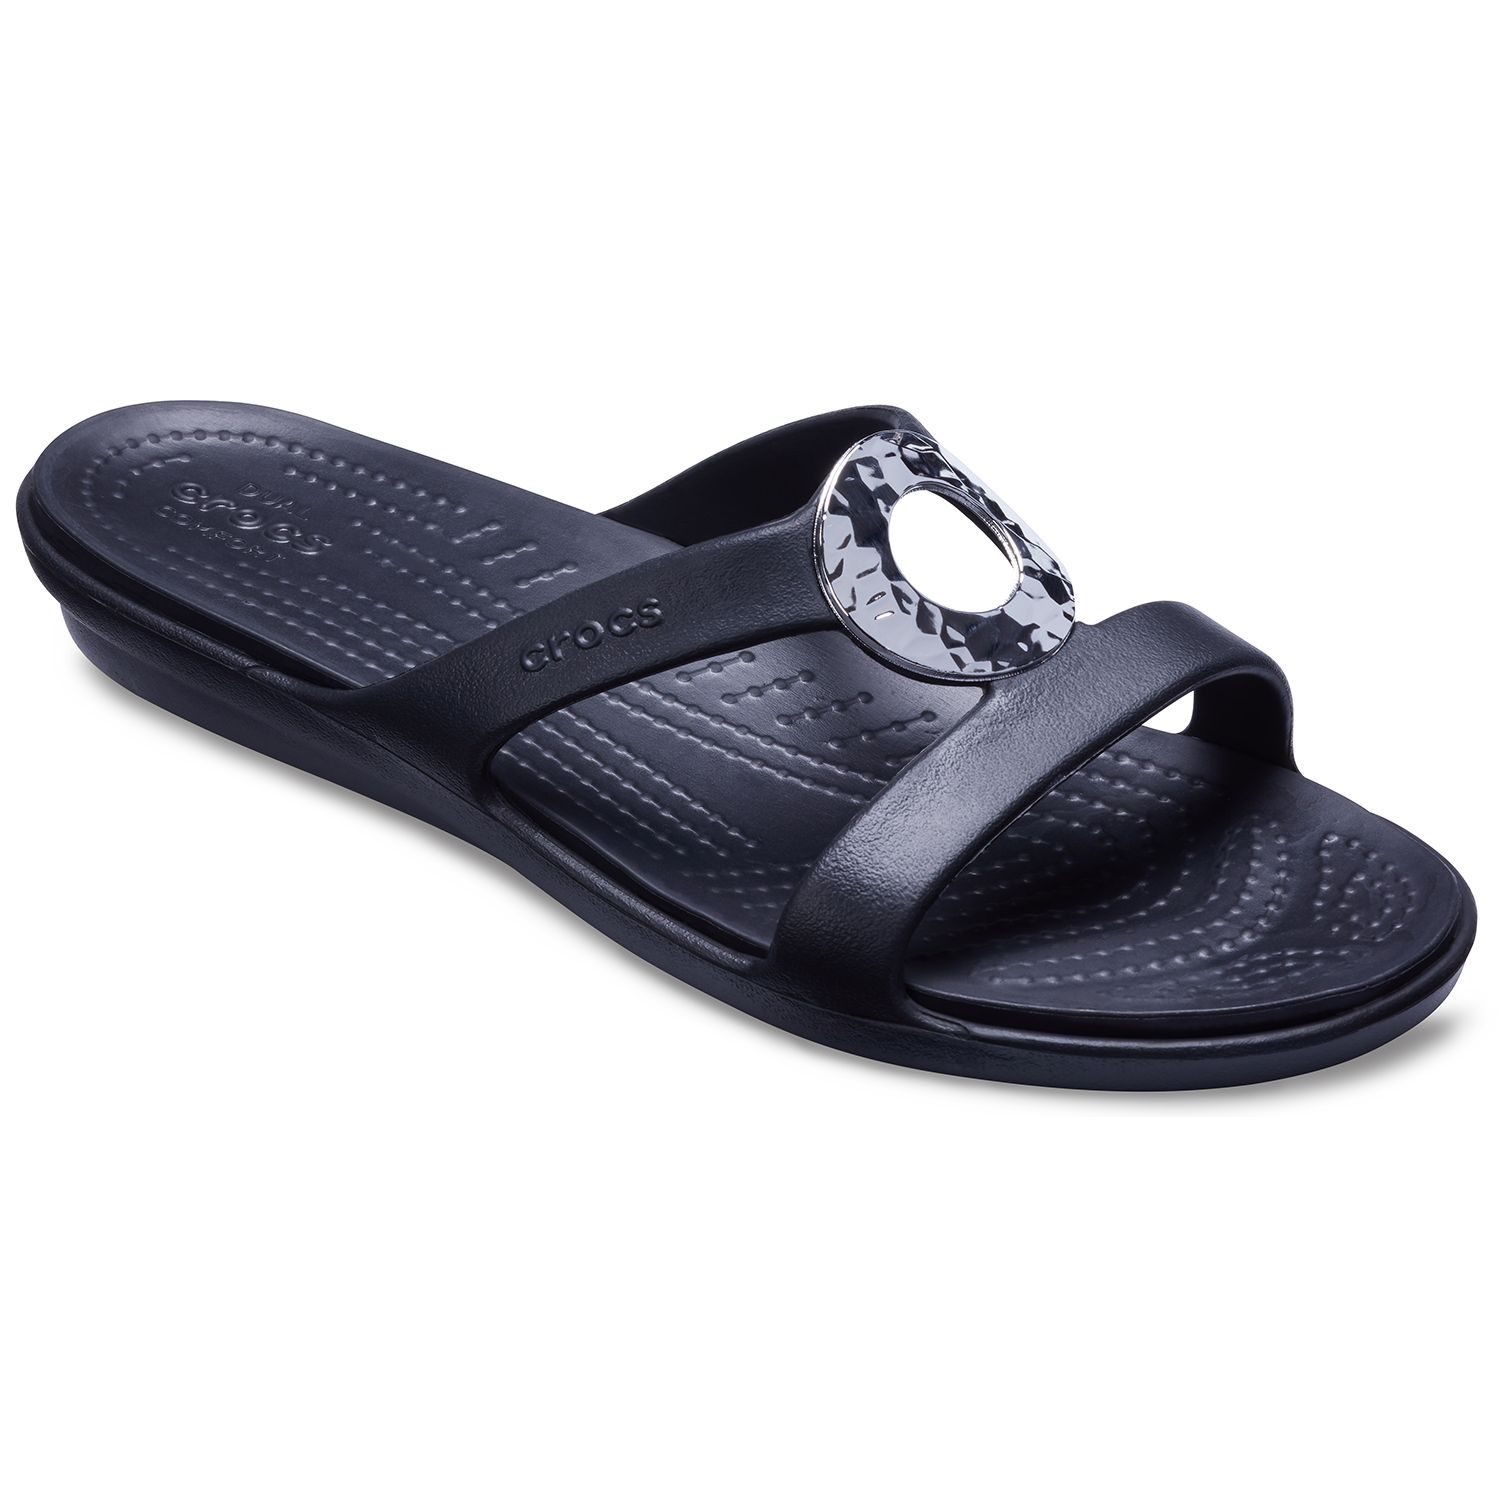 Crocs Sanrah Women's Slide Sandals